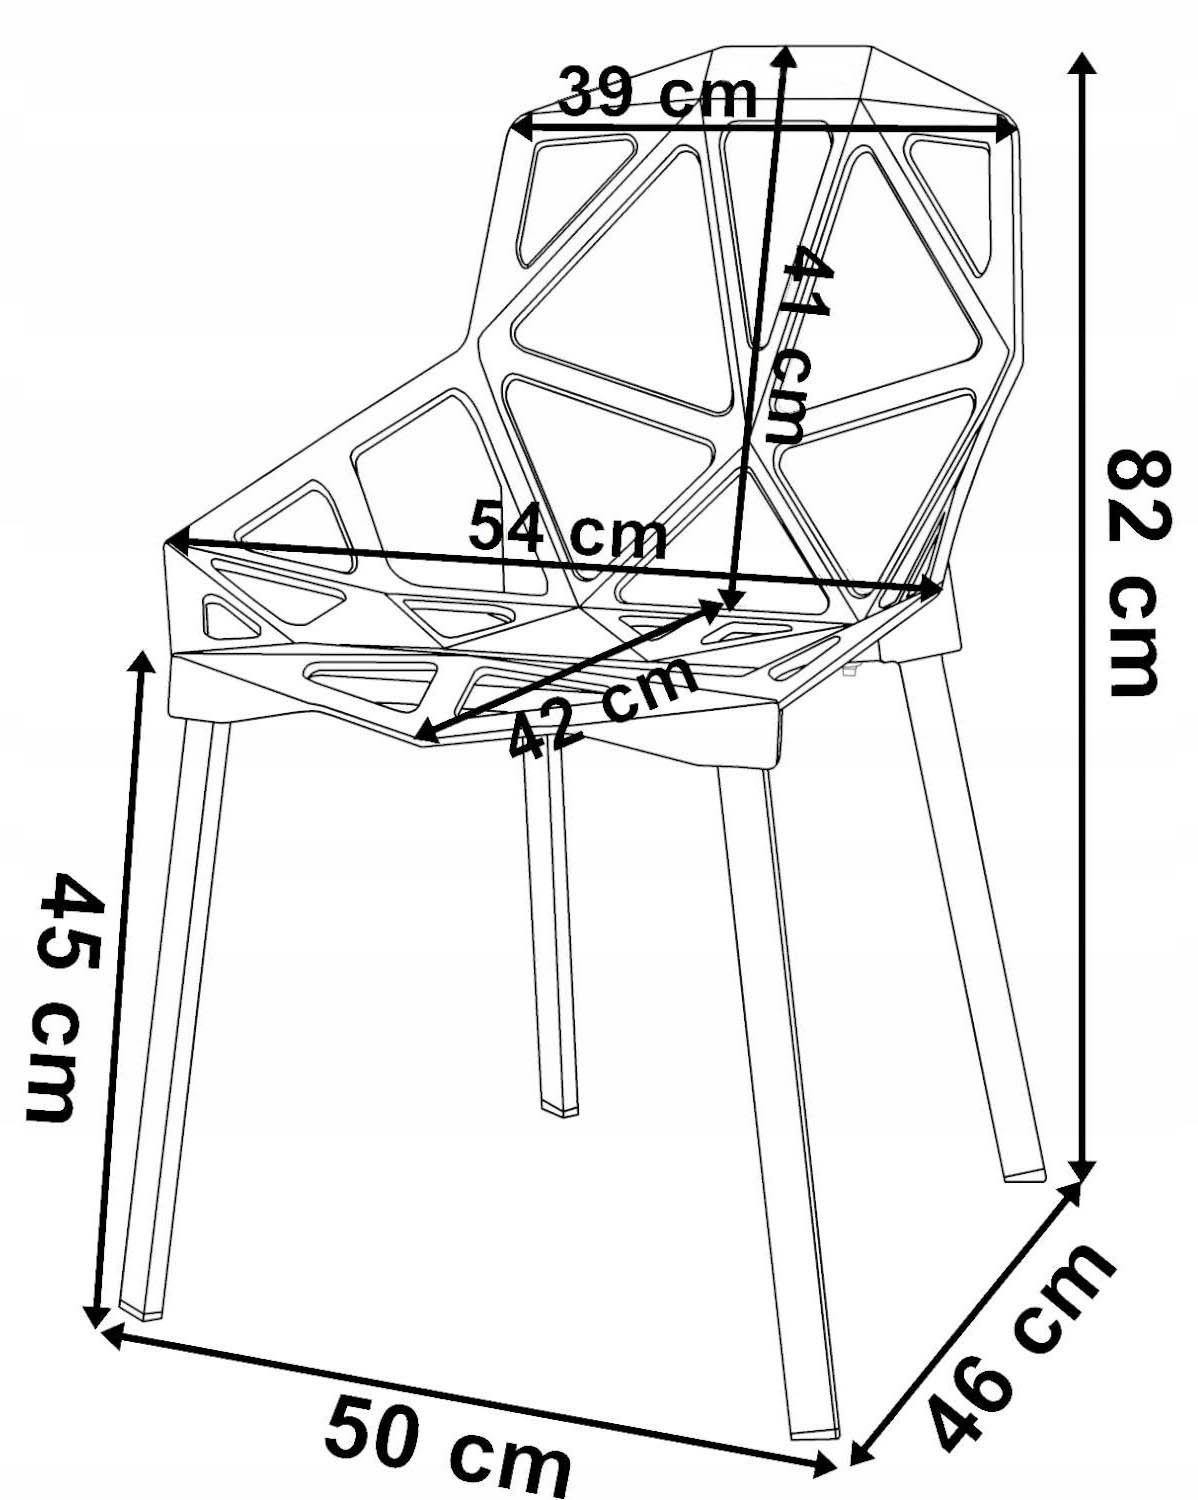 krzeslo azurowe vector cztery sztuki 